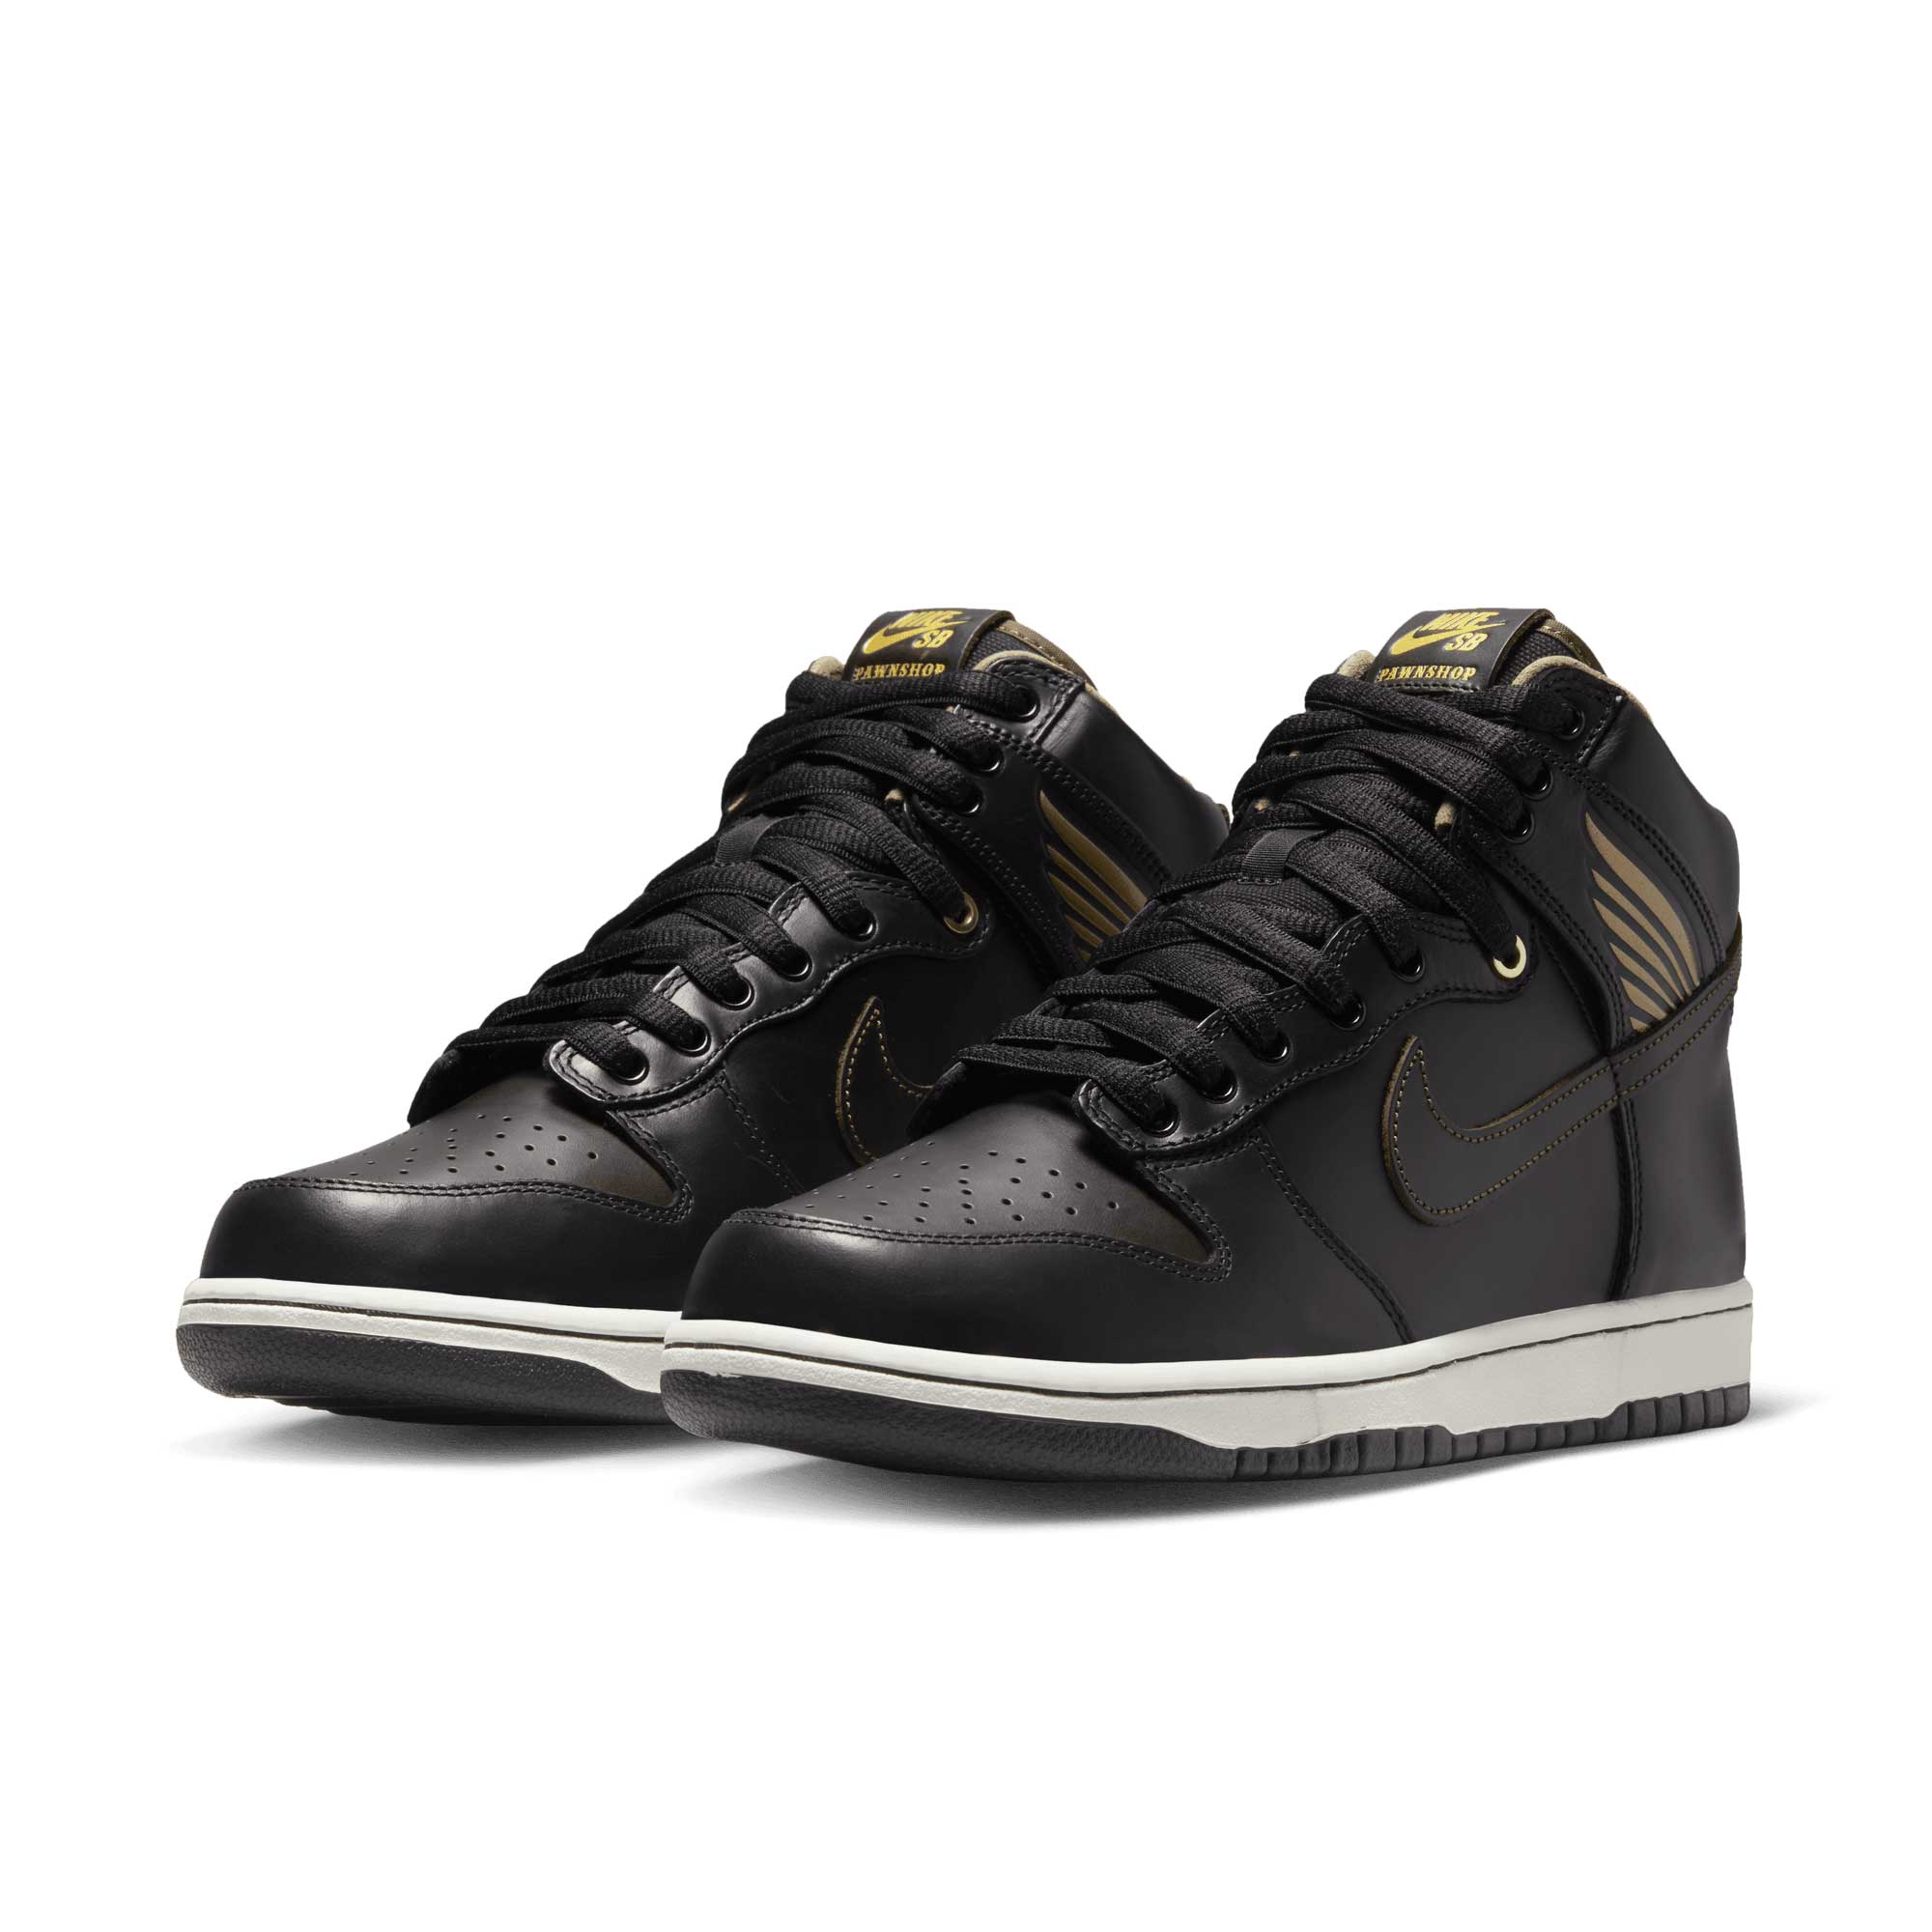 Nike SB Dunk High OG Pawnshop QS, black/black-metallic gold